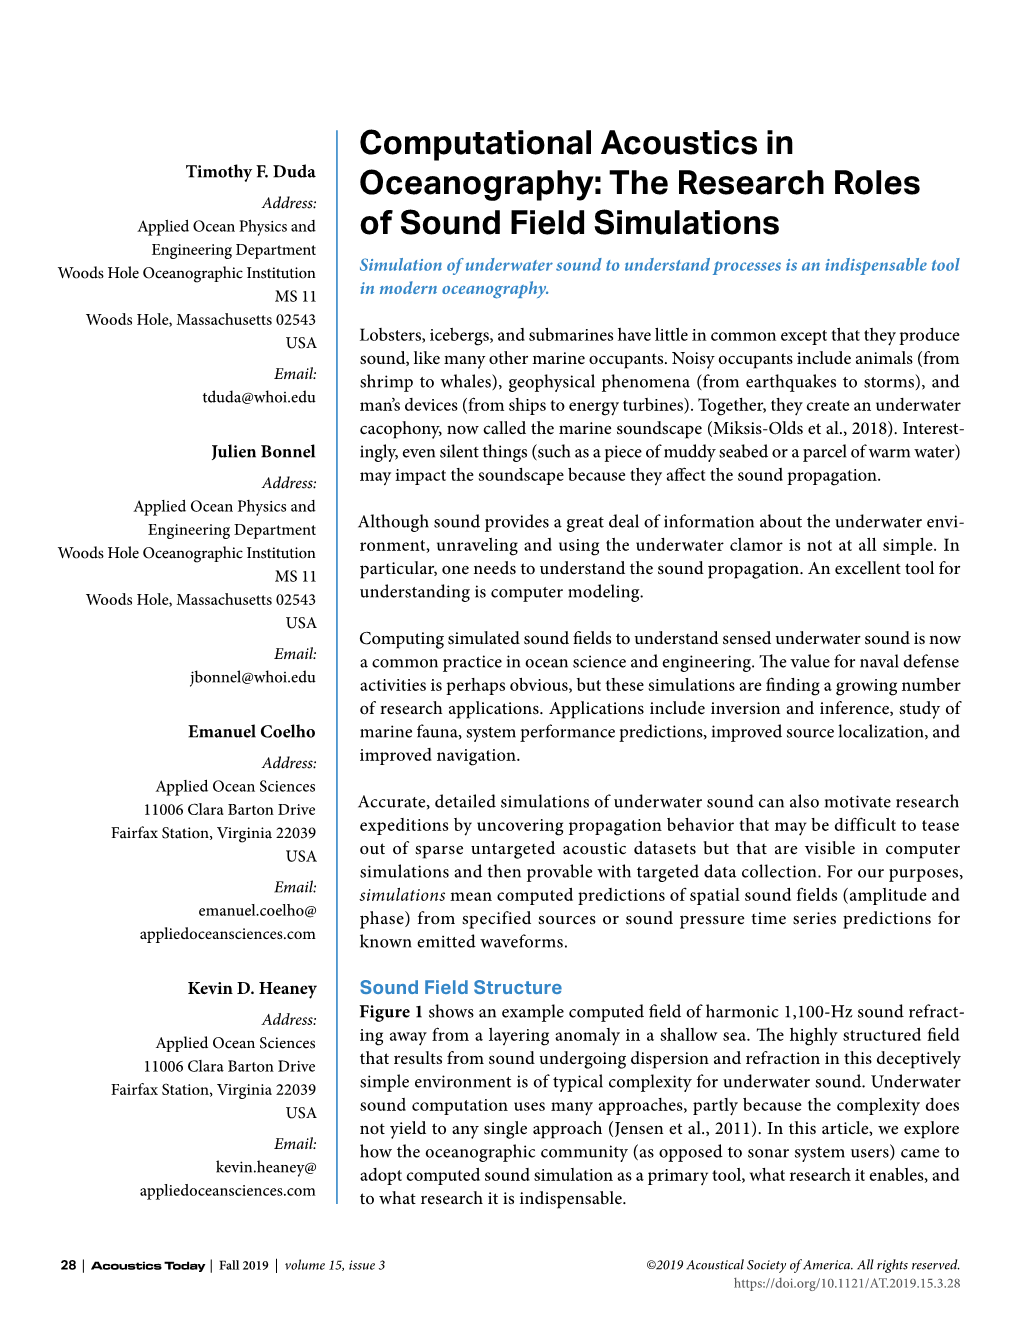 Computational Acoustics in Oceanography